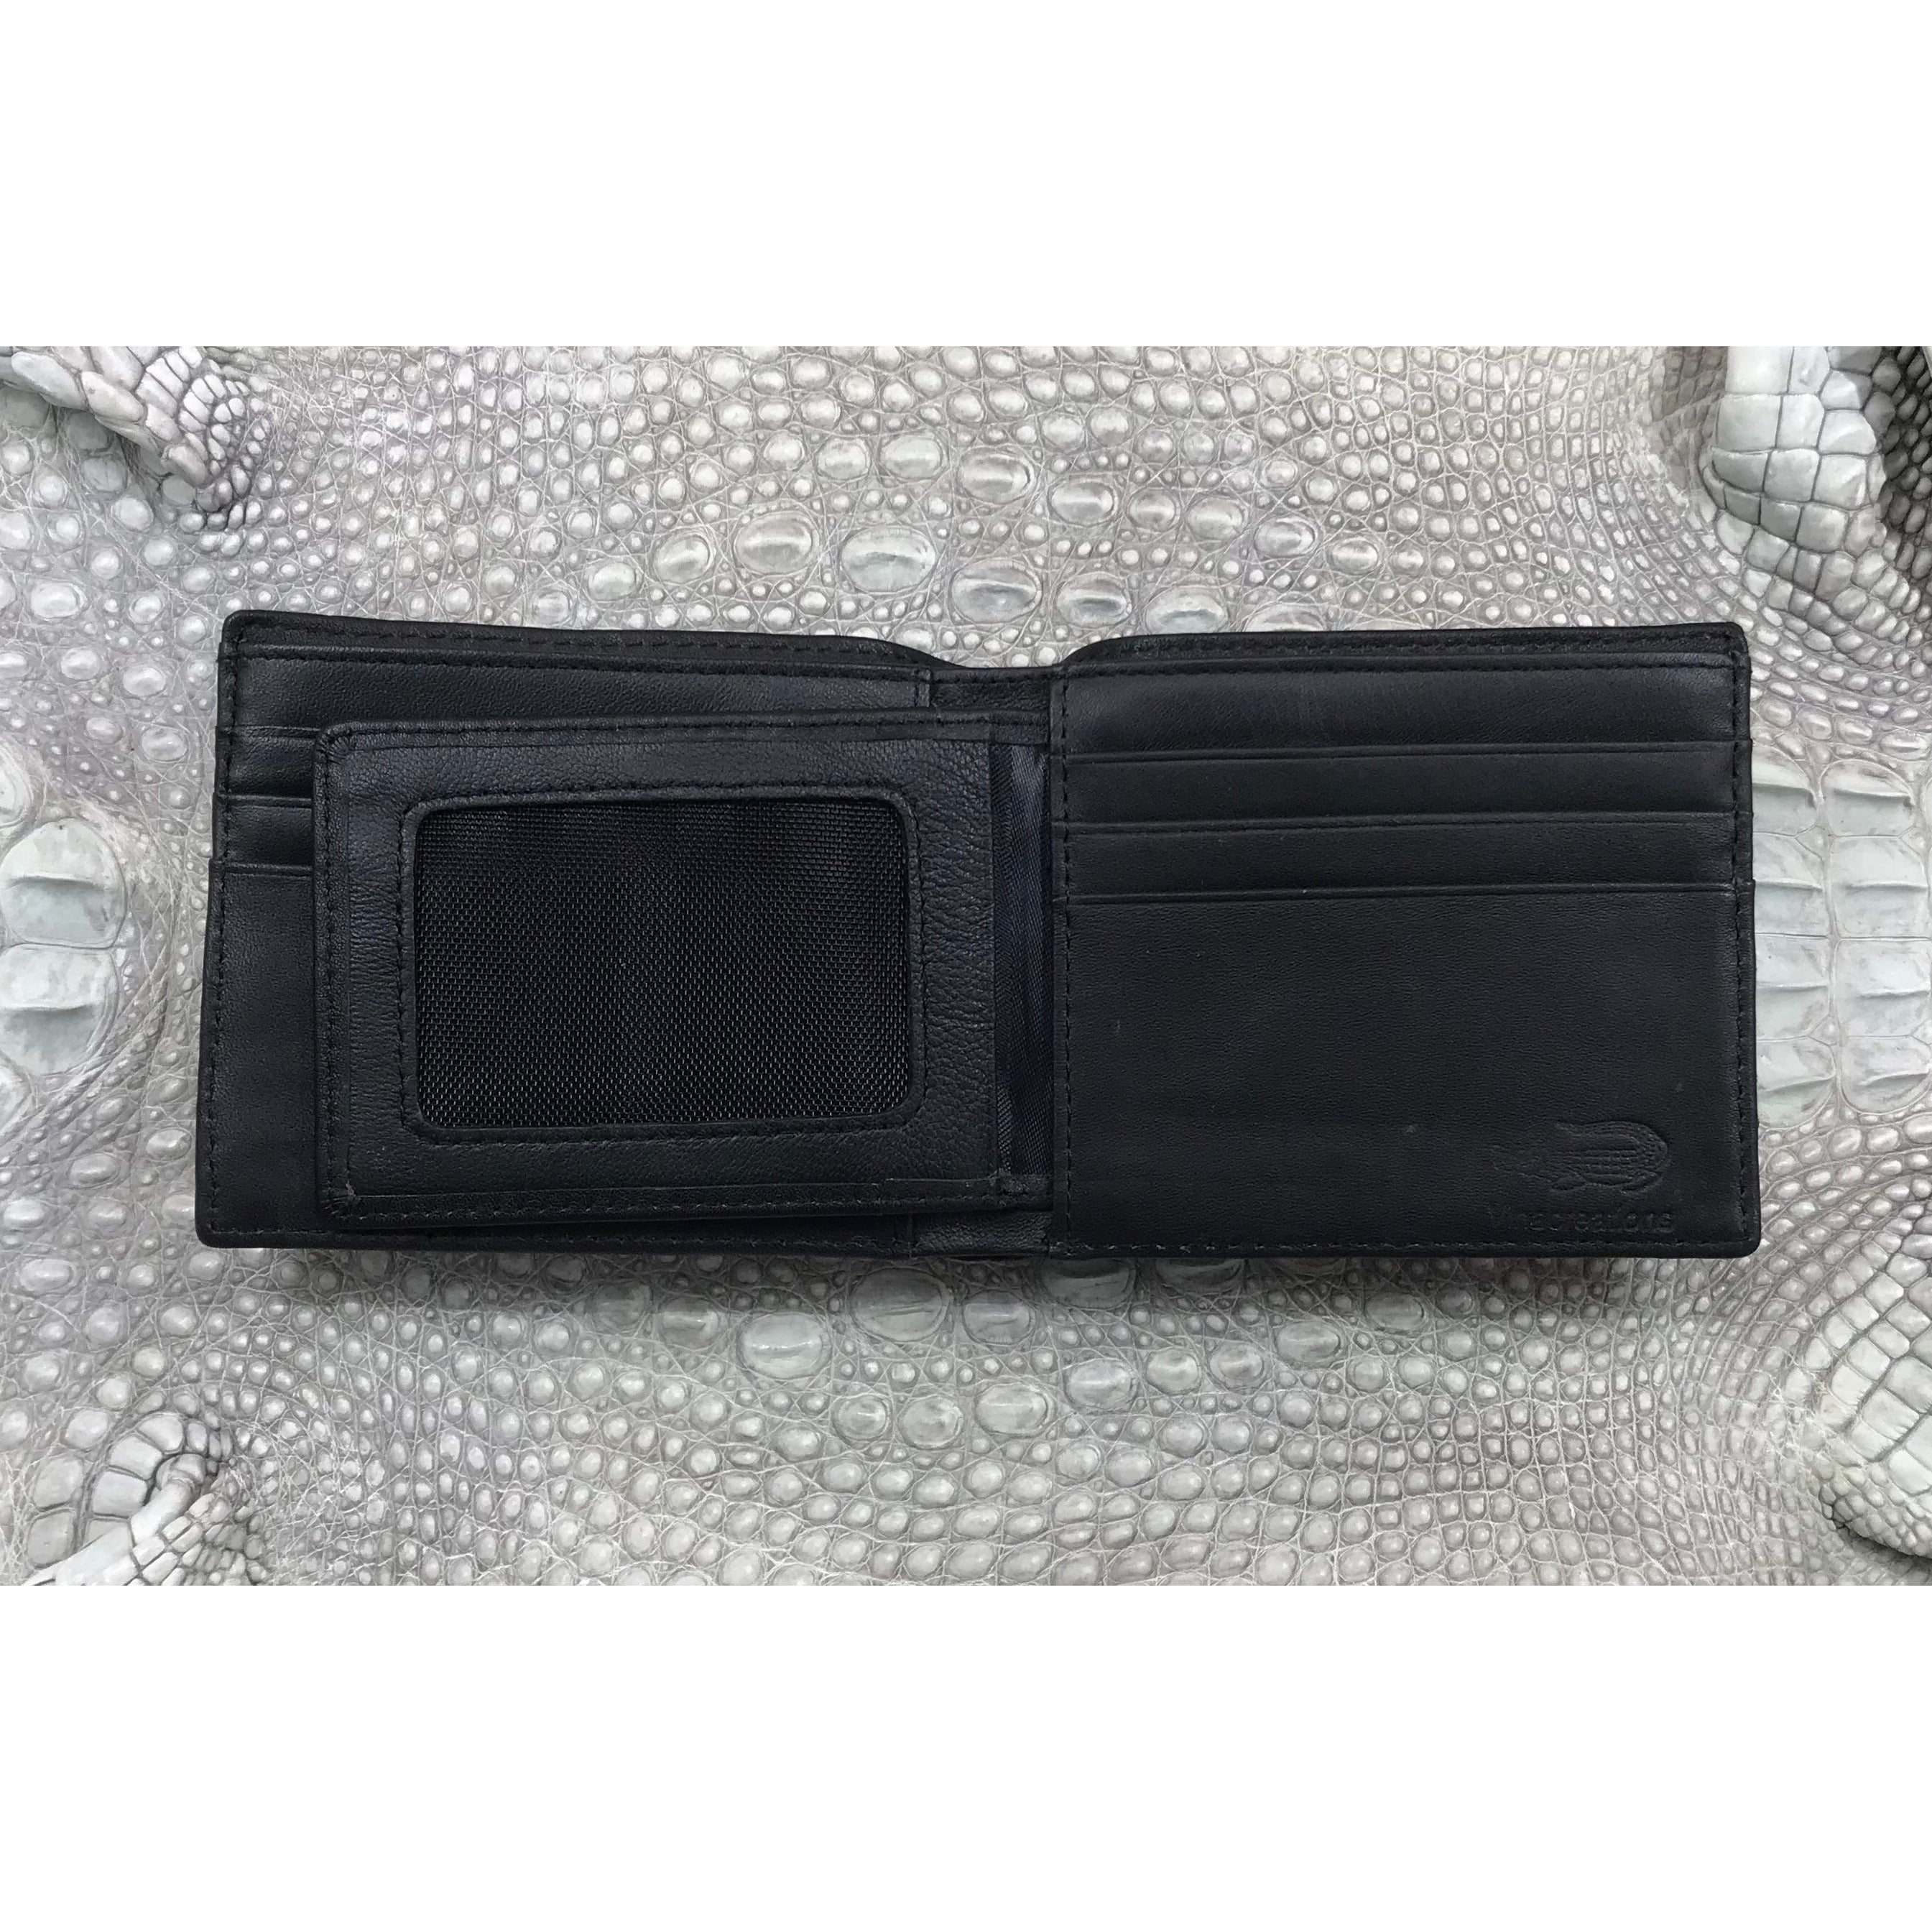 Black Alligator Skin Bifold Wallet For Men | Handmade Crocodile Leather Wallet RFID Blocking | VL5618 - Vinacreations